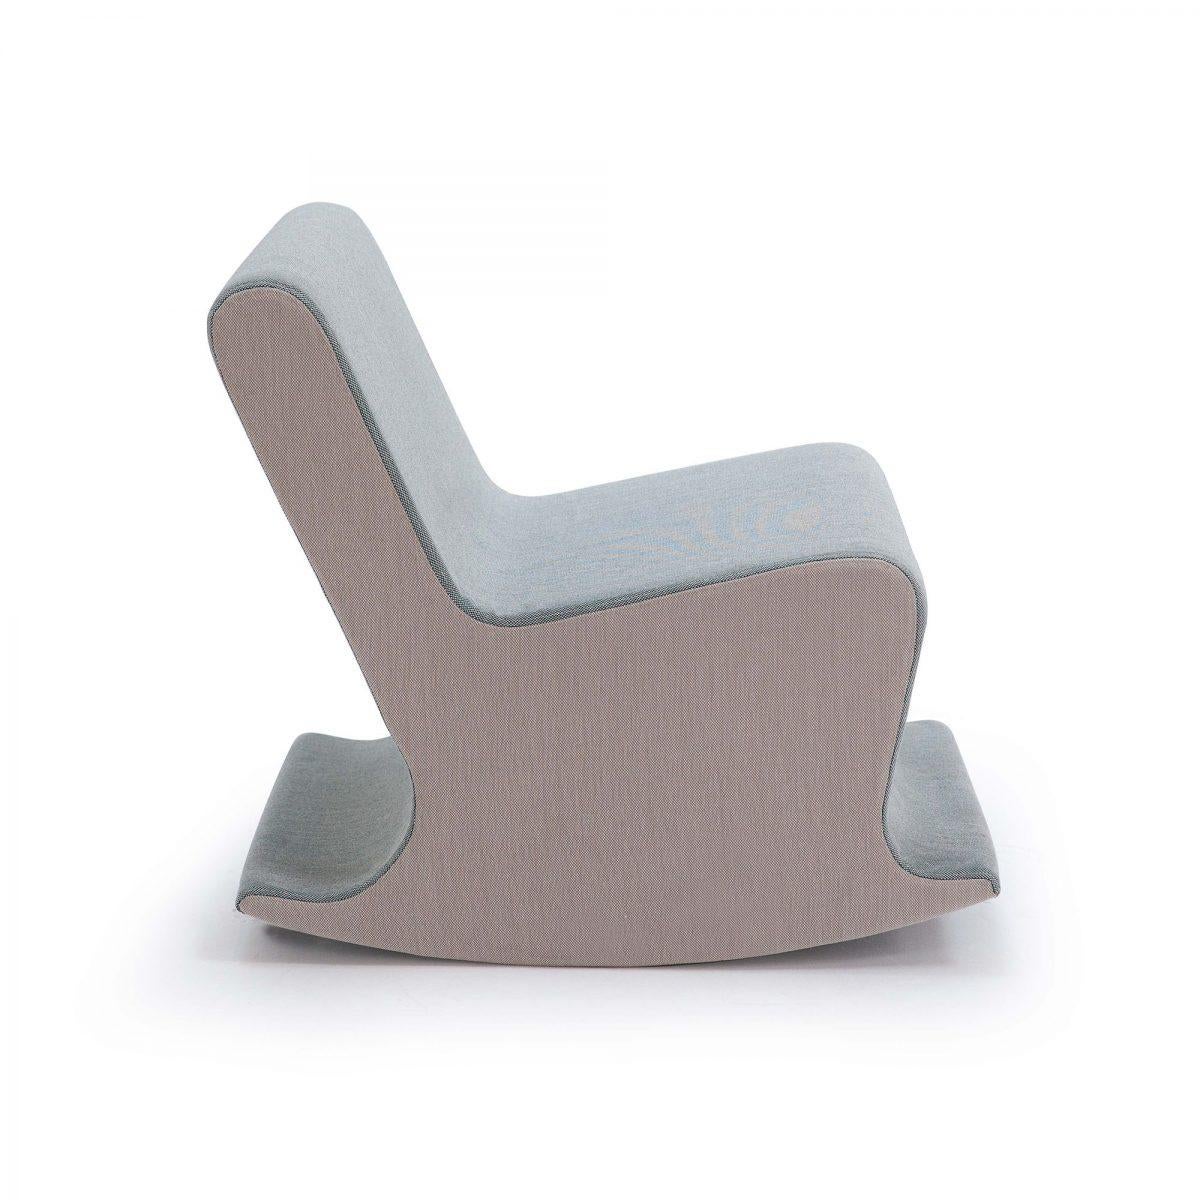 Contemporary Dondolo Rocking Chair Designed by Claudio Colucci